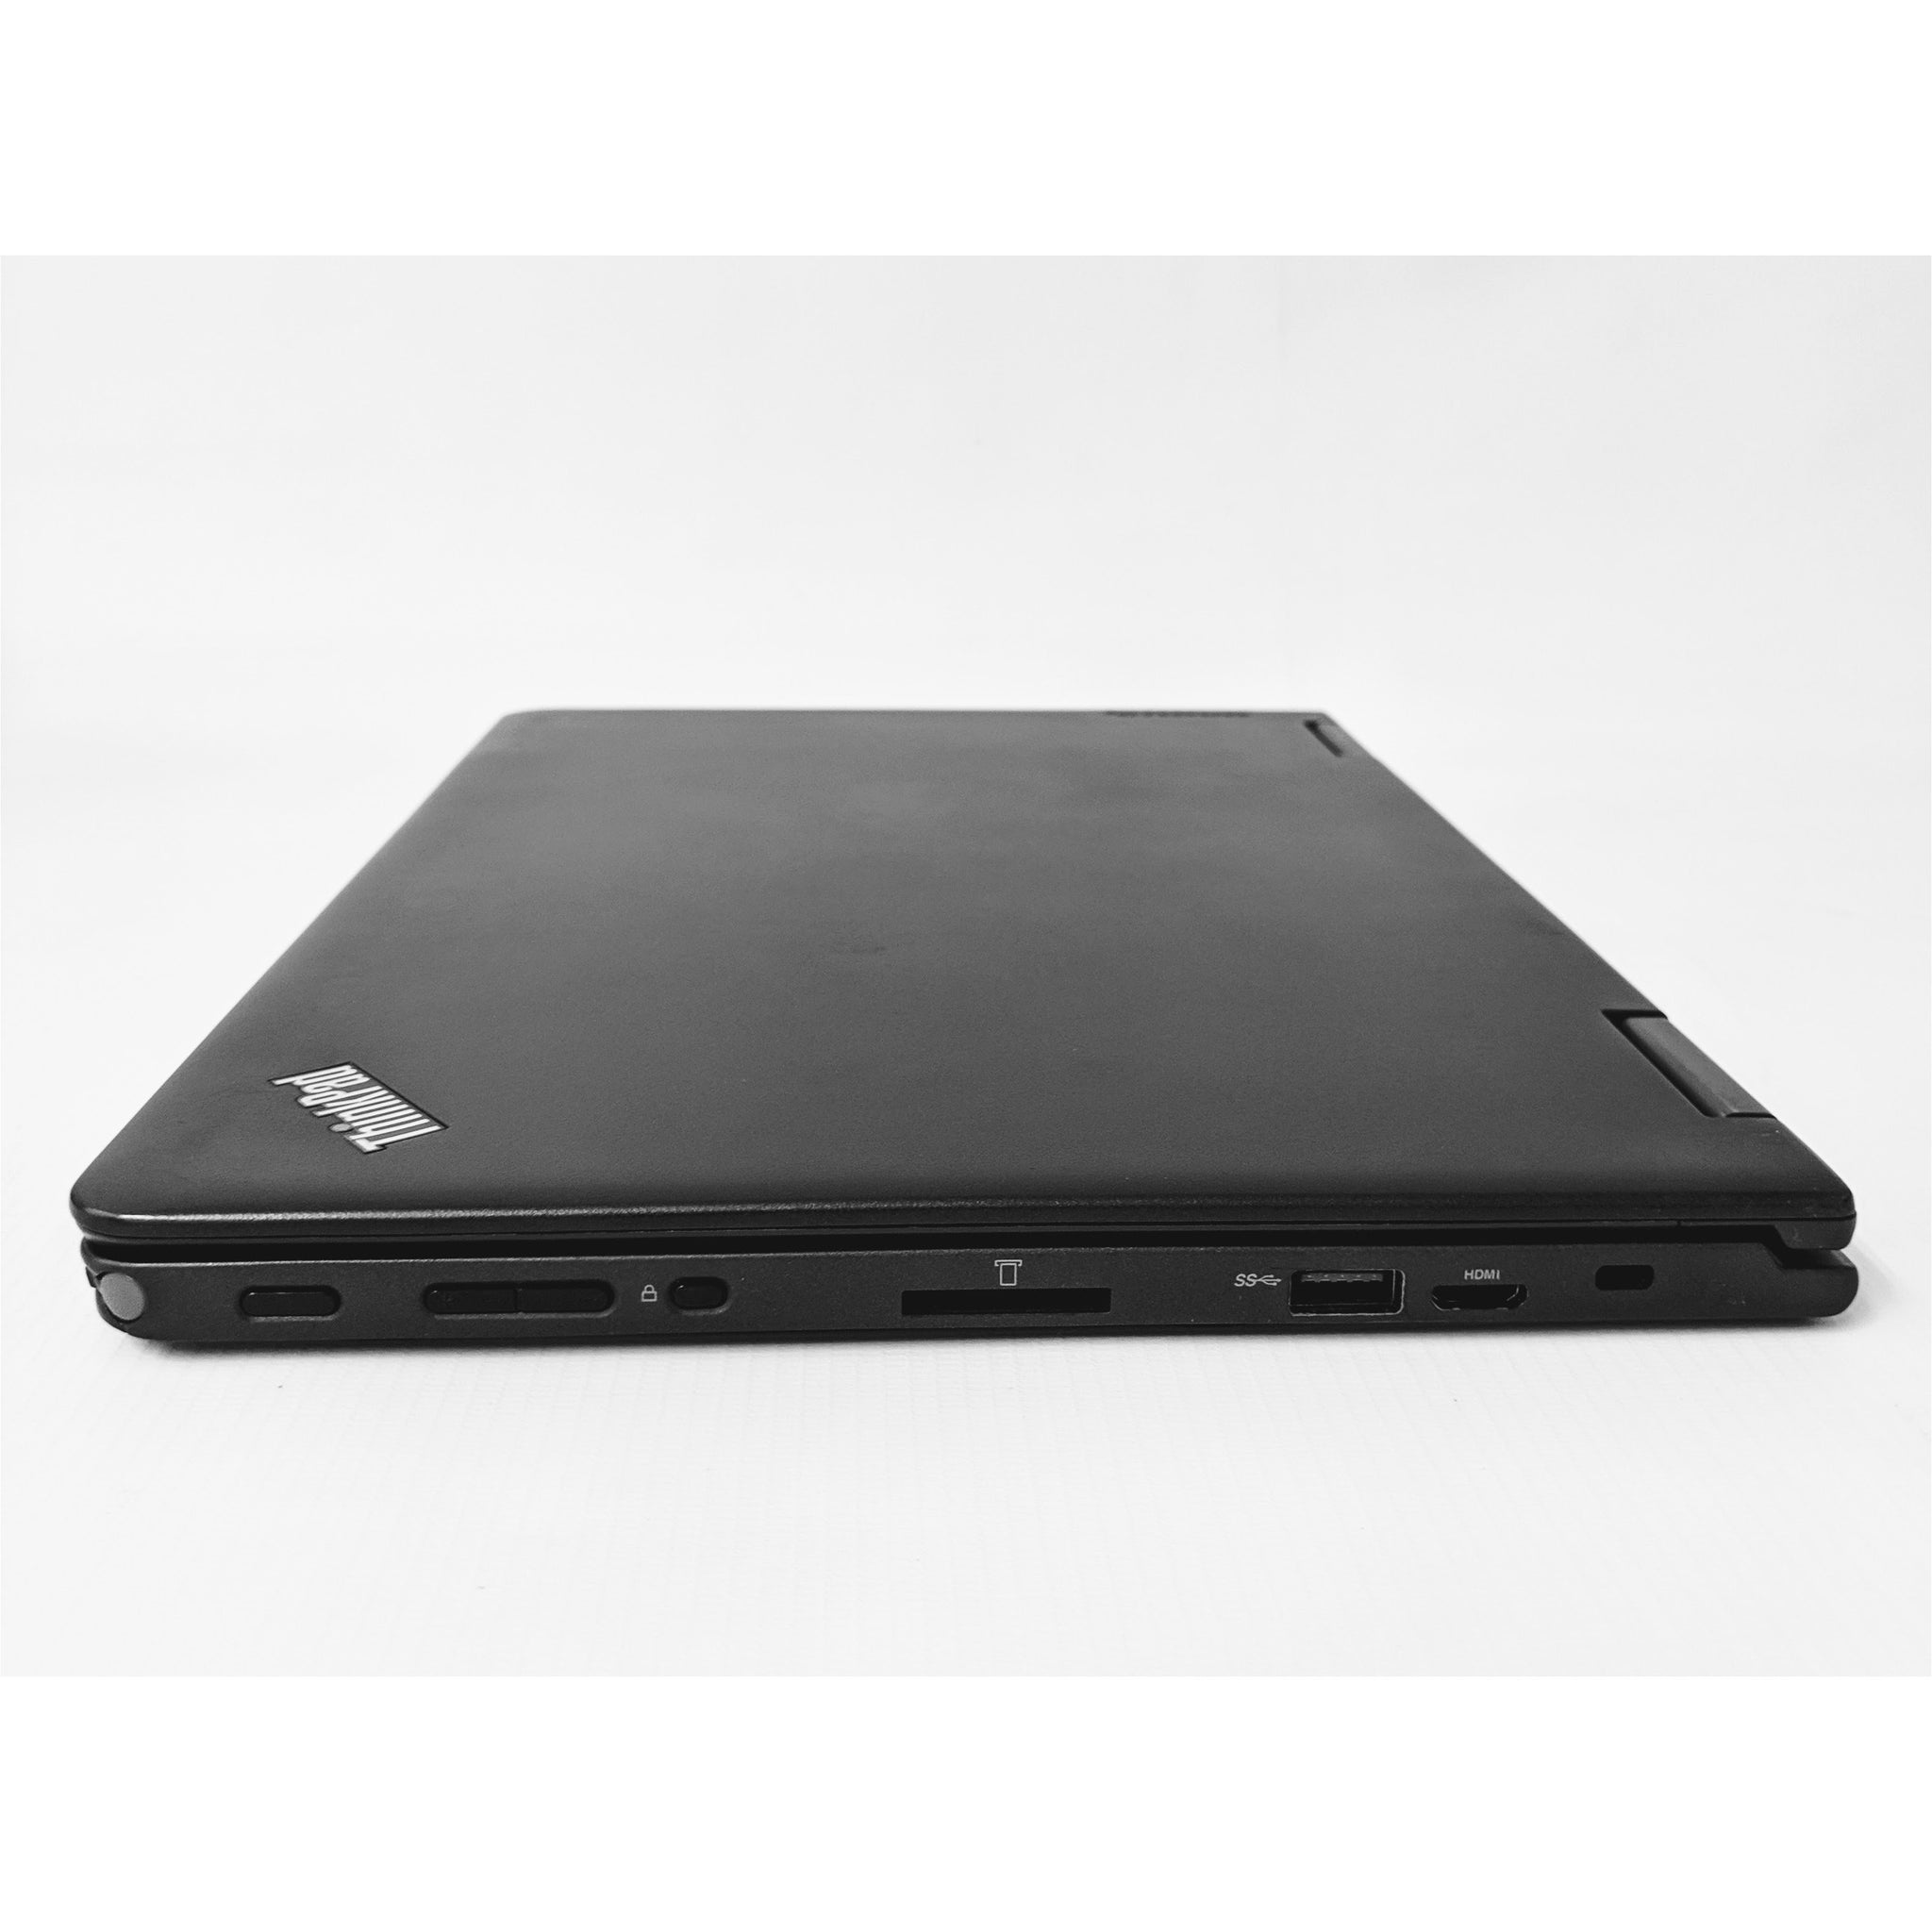 Lenovo Thinkpad Yoga S1 i7-4600U 3.3GHz Convertible Touchscreen Laptop 1080p Full HD